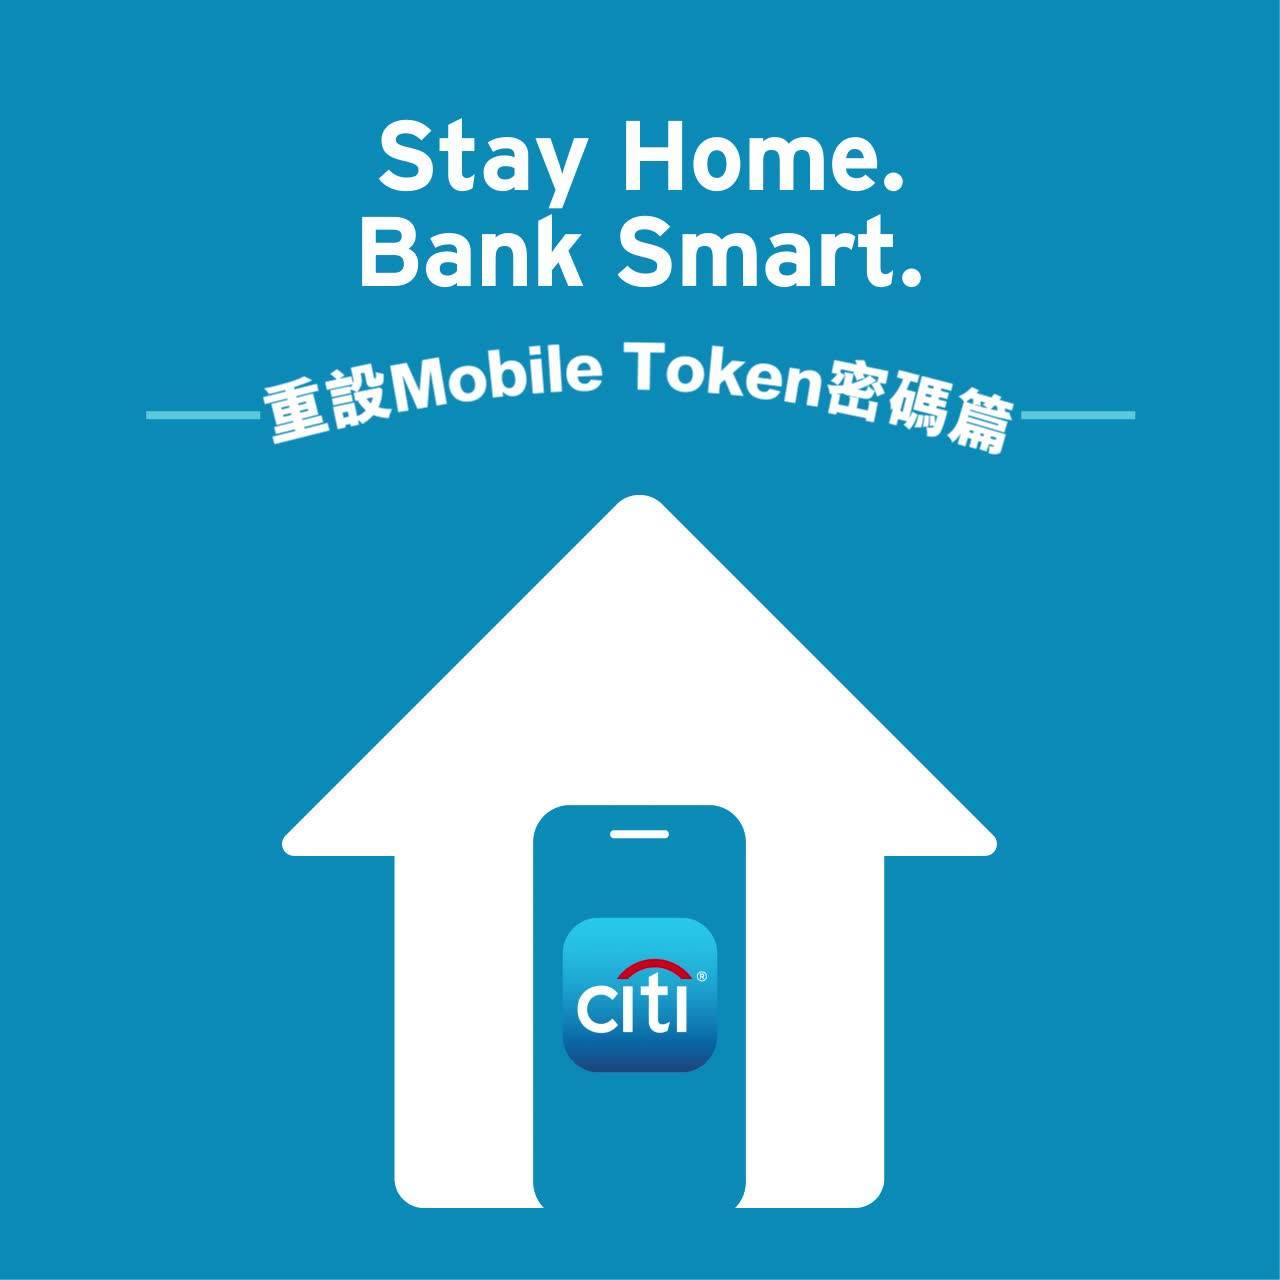 【”Stay Home. Bank Smart.” – 重設Mobile Token密碼篇】